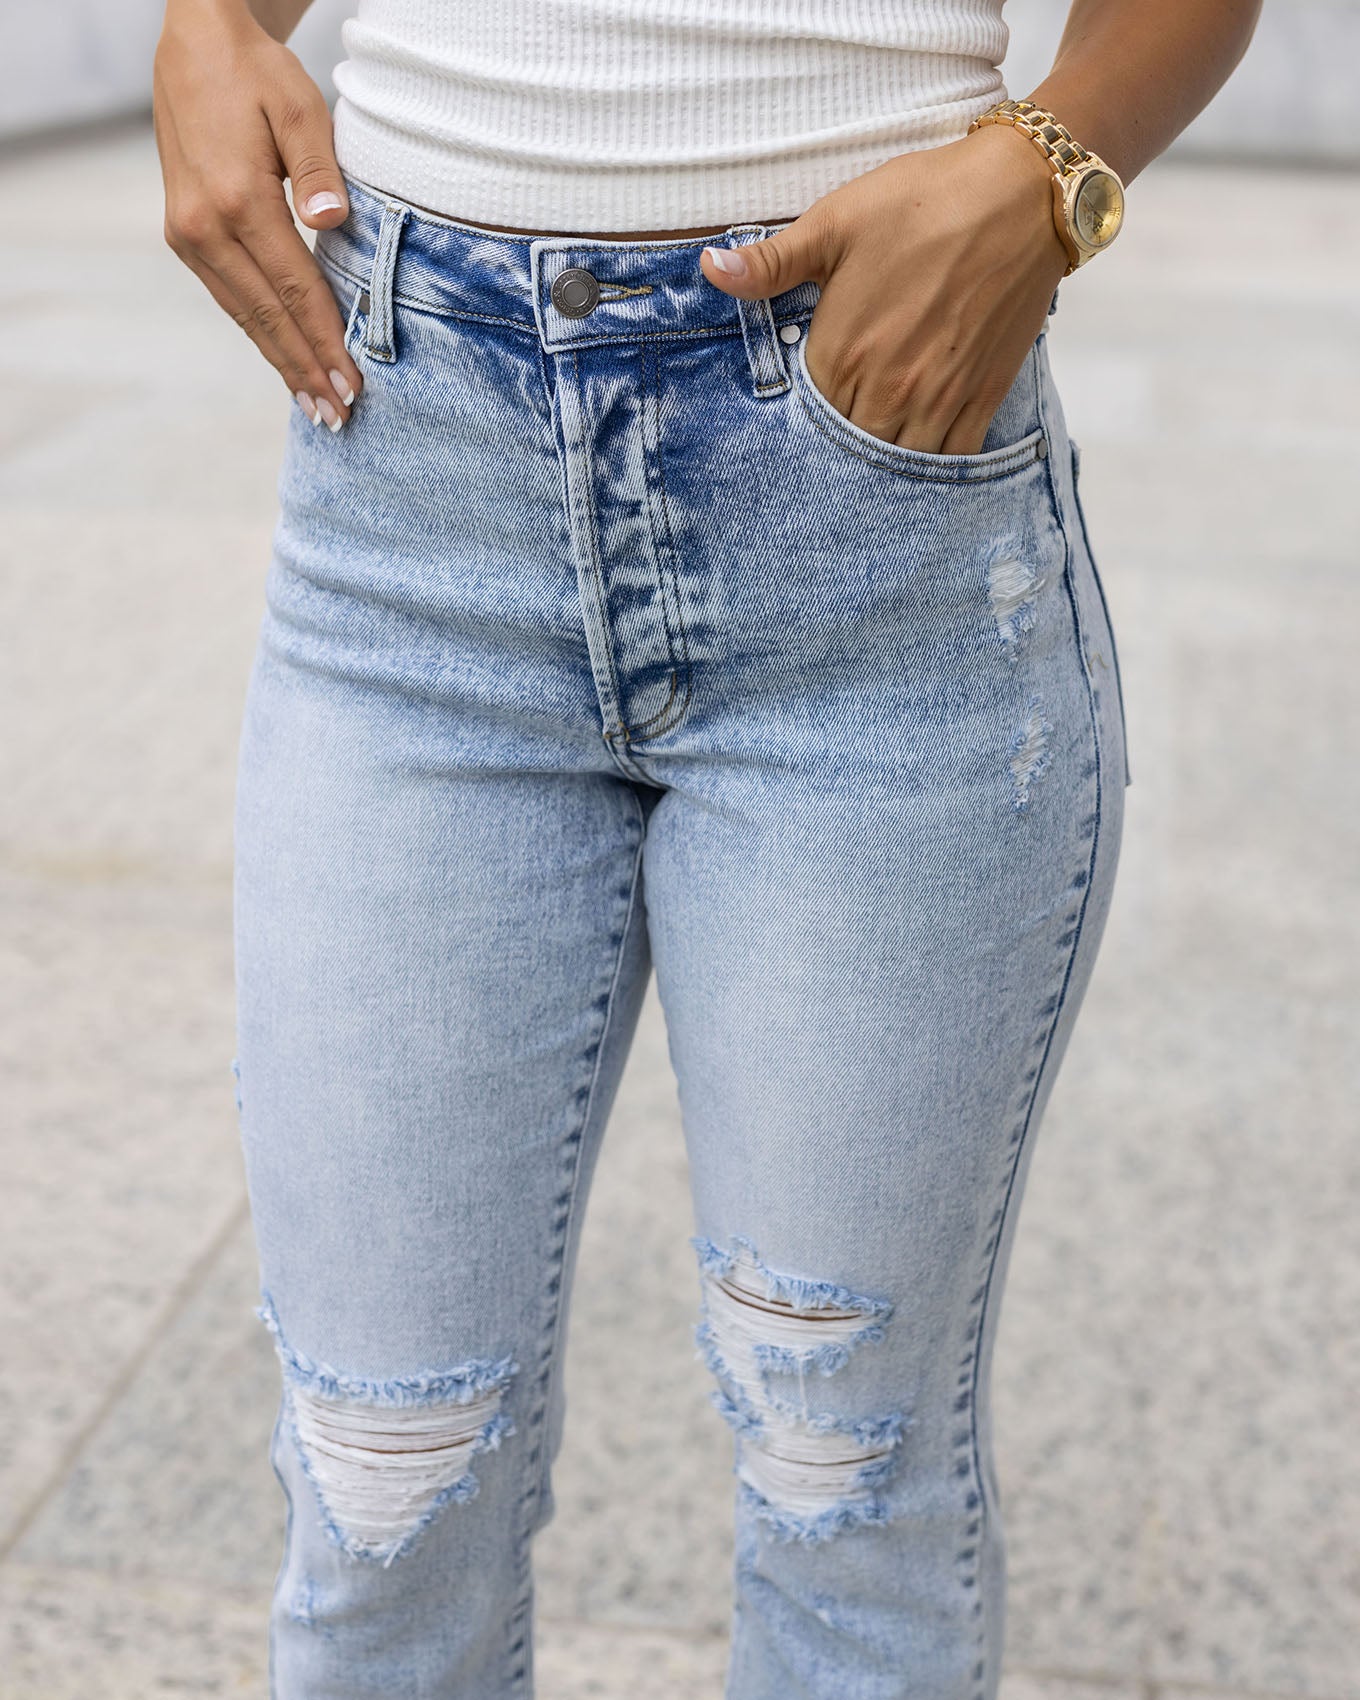 Tapered-Leg Super High-Rise Jean, The Mom Jeans, Regular